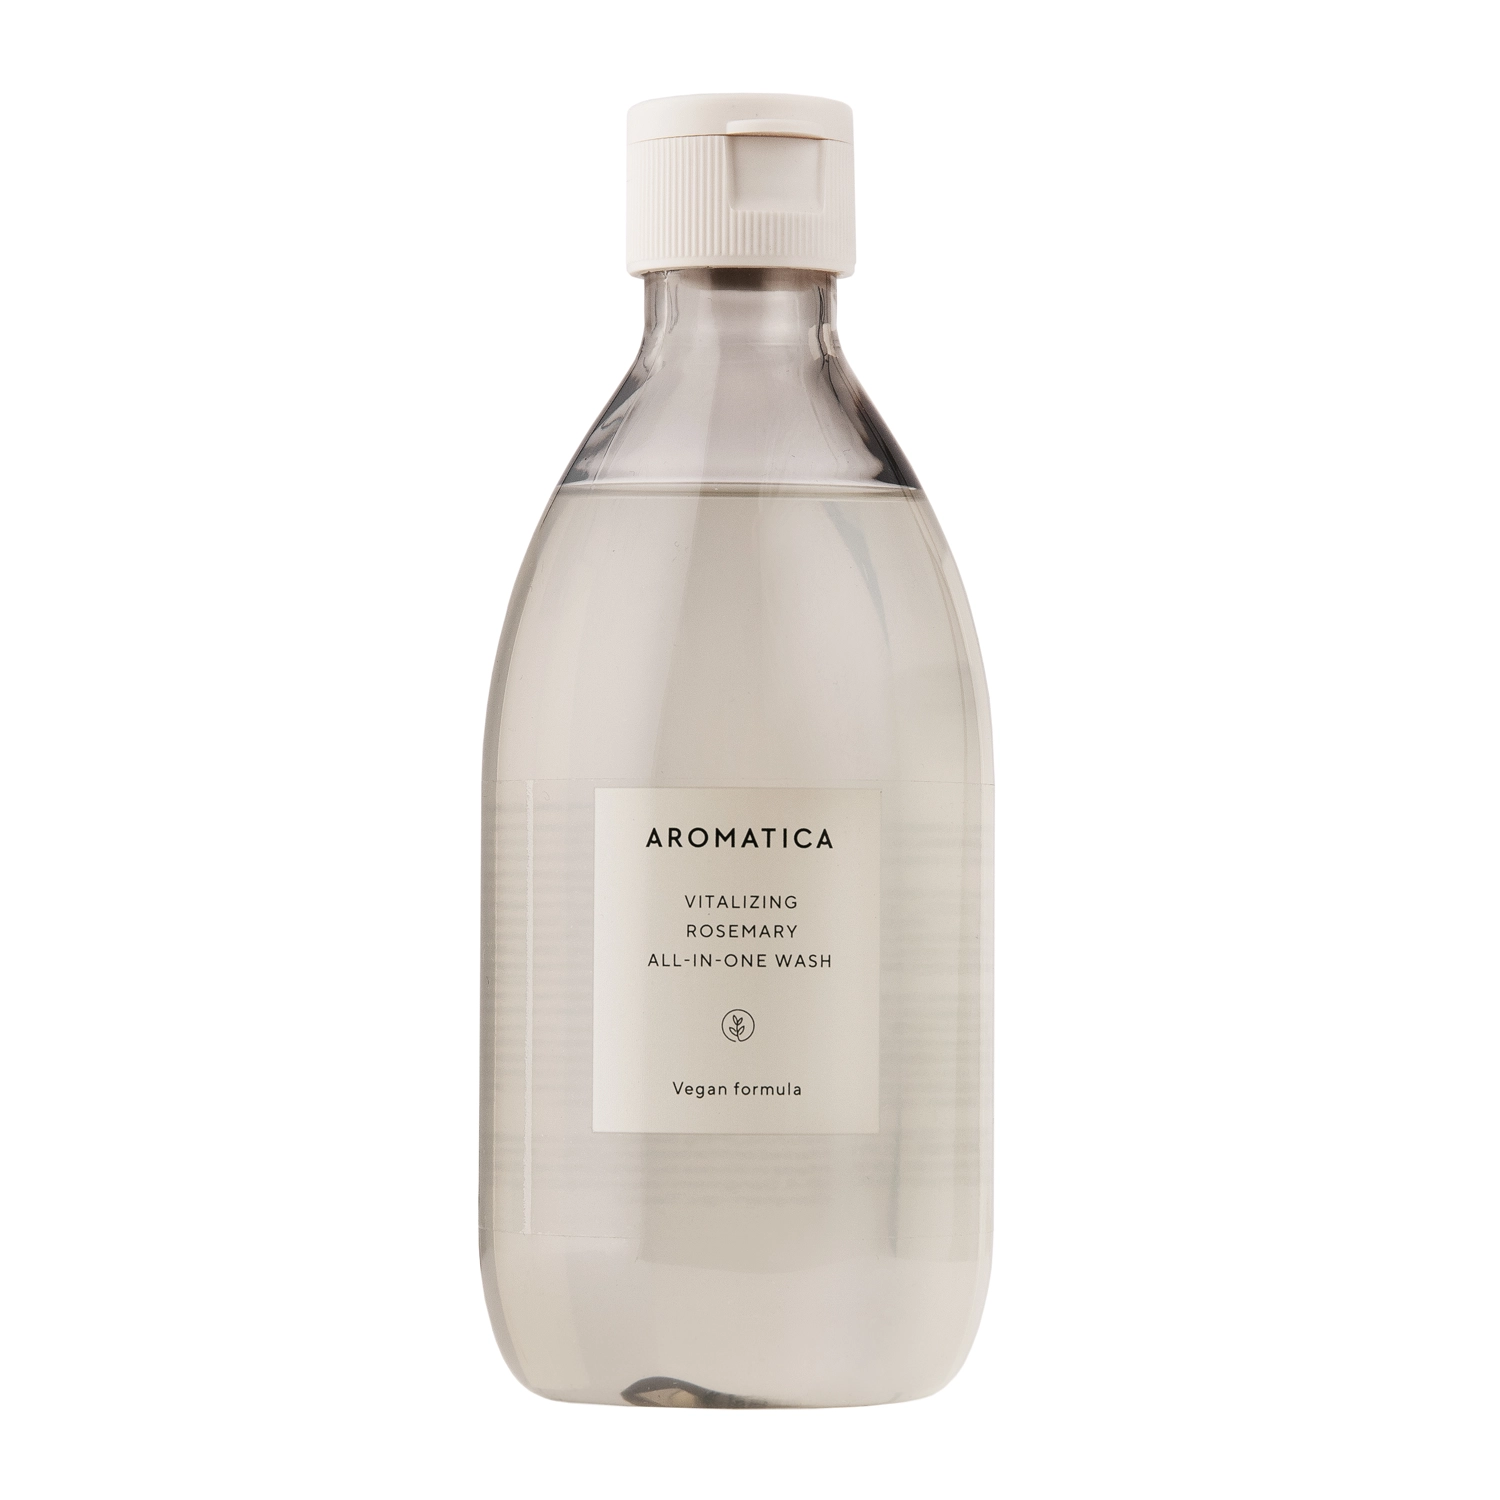 Aromatica - Универсальный гель для очищения - Vitalizing Rosemary All-in-One Wash - 300ml